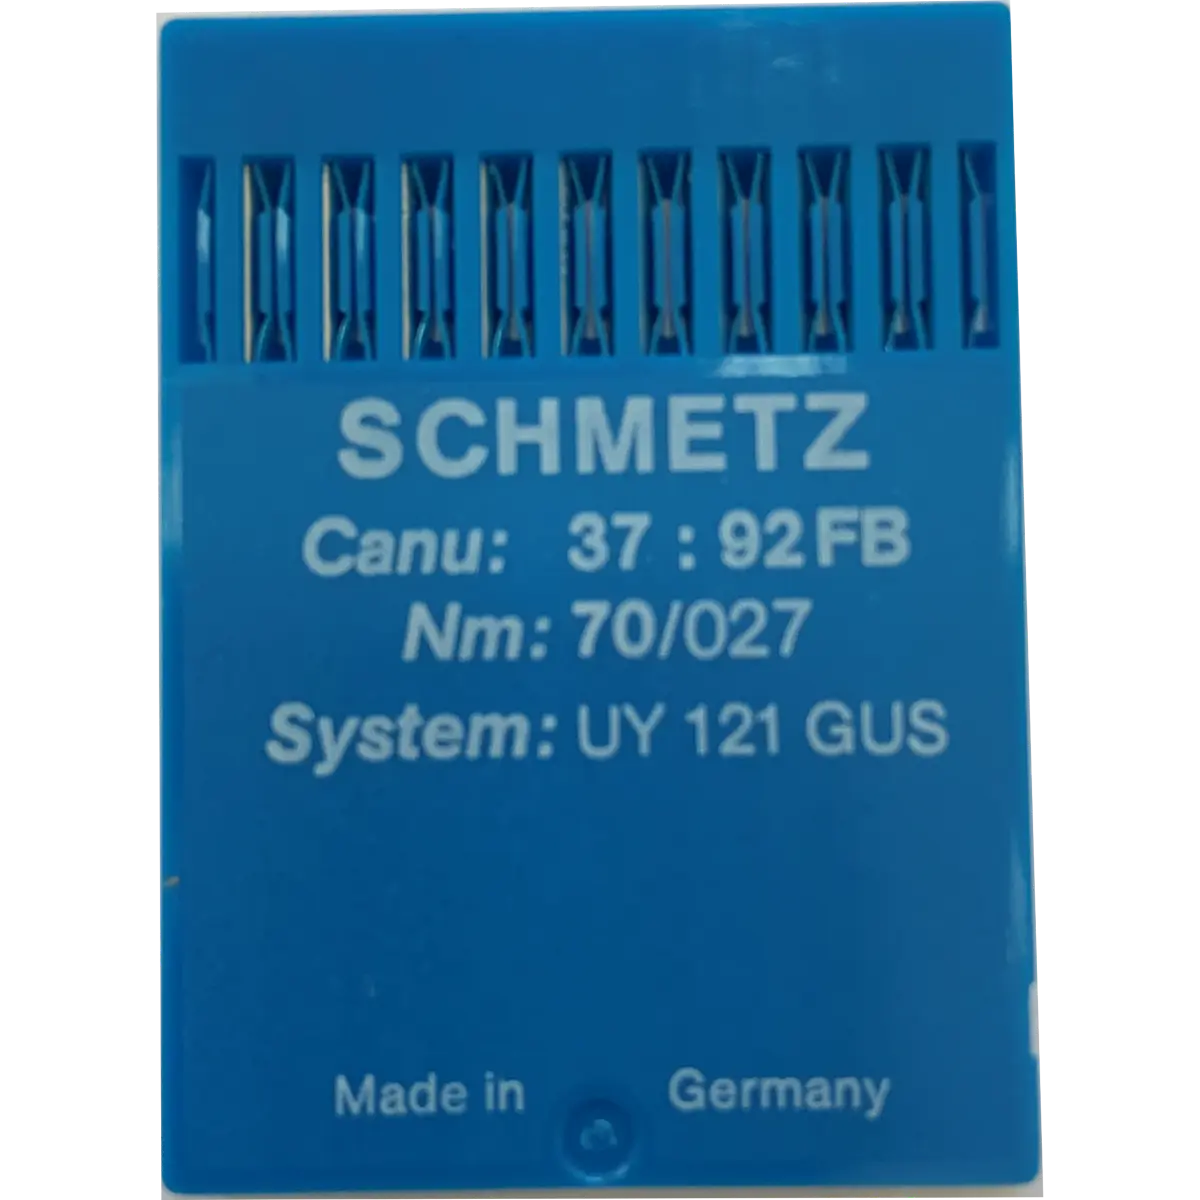 Schmetz Industrial Needles UY 121 GS, UYX 121, MY1001, DVx1, SY3510